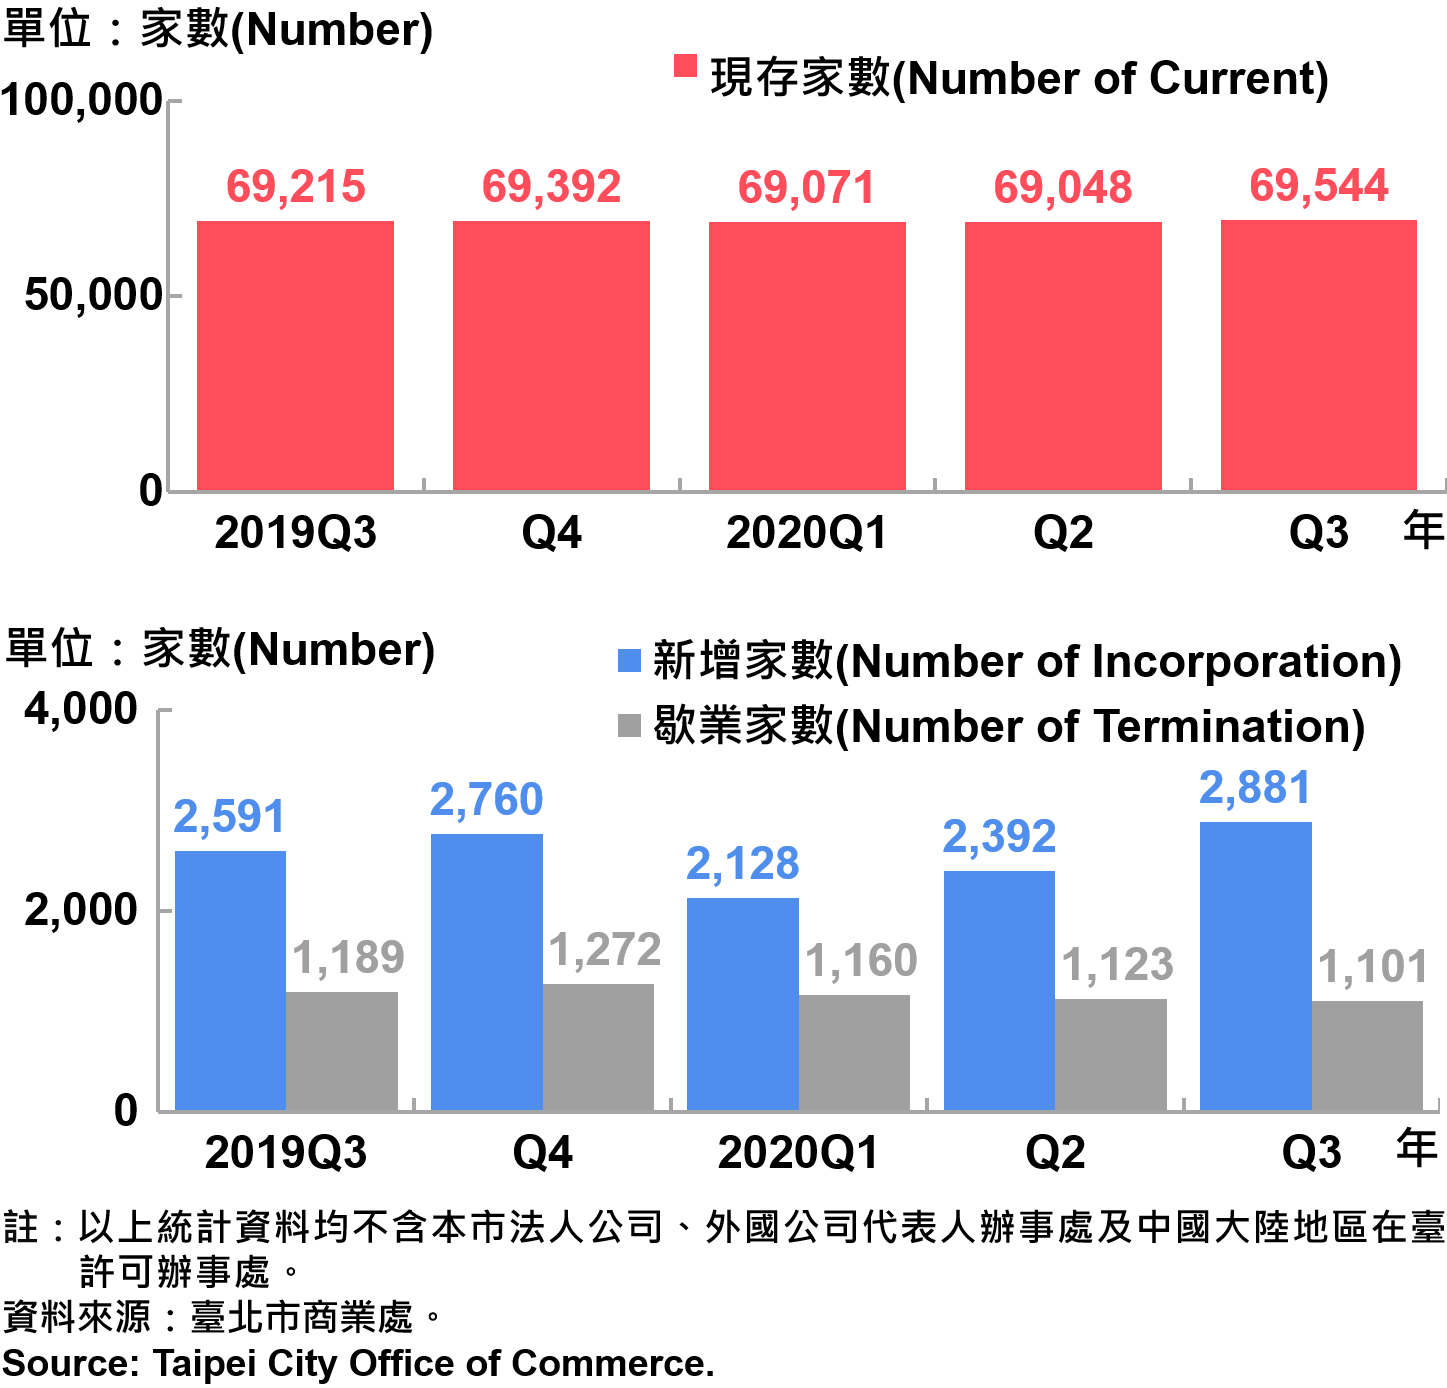 臺北市公司行號之青創負責人分布情形—2020Q3 Responsible Person of Newly Registered Companies In Taipei City—2020Q3